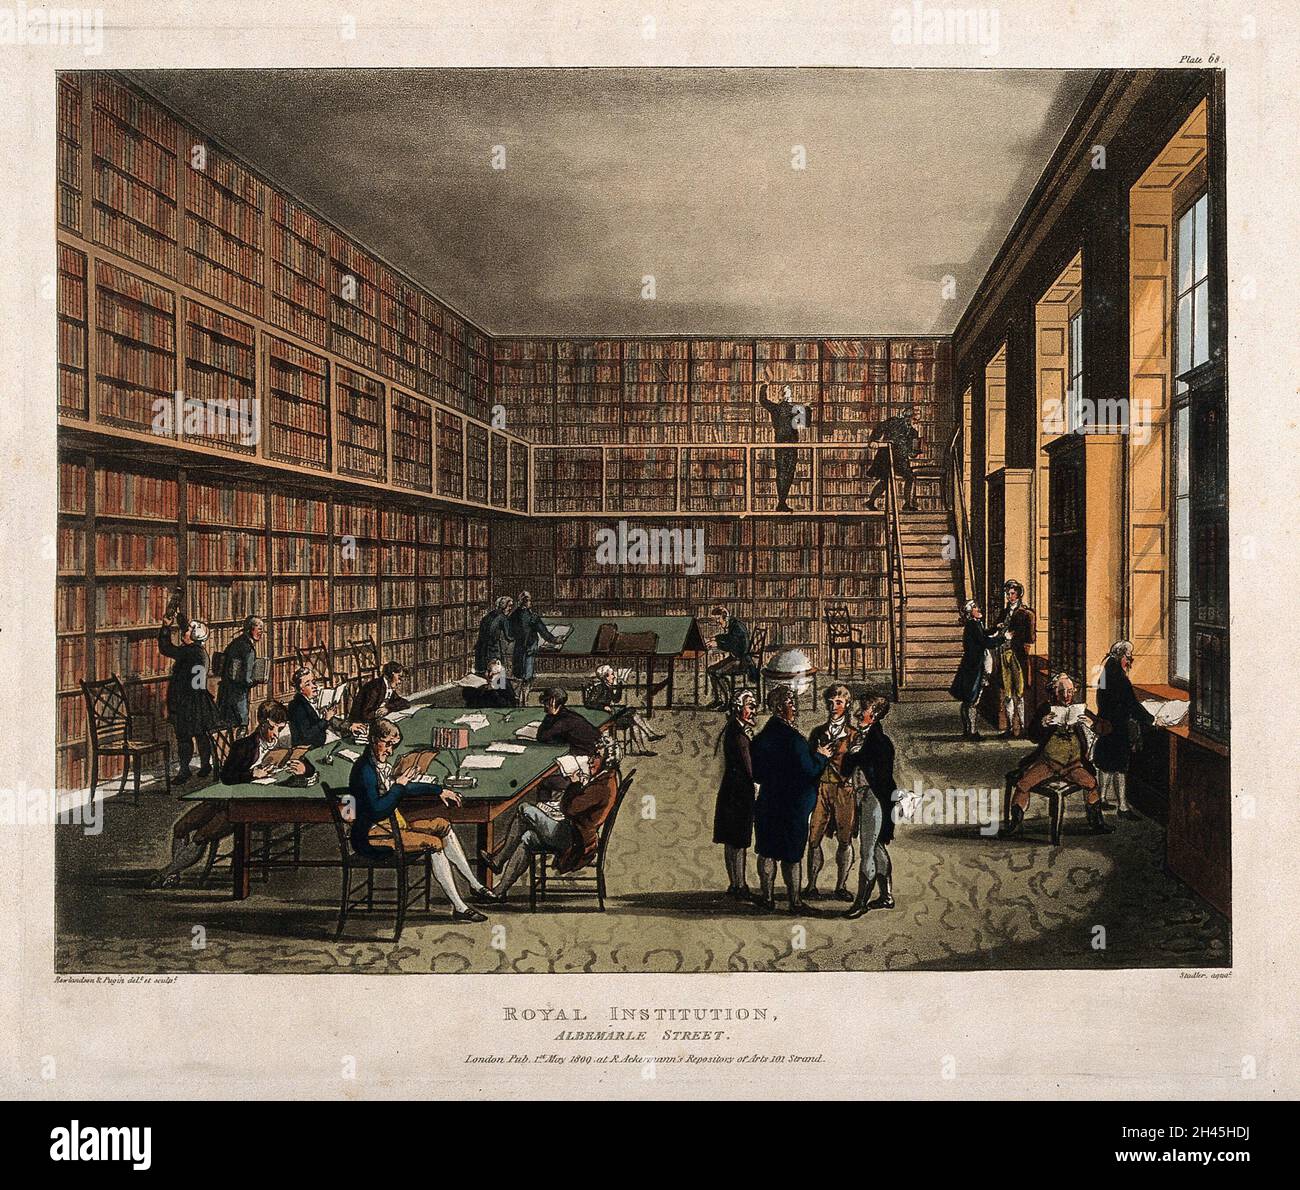 The Royal Institution, Albemarle Street: La biblioteca. Acquatint colorato da J. C. Stadler, 1800, dopo A. C. Pugin e T. Rowlandson. Foto Stock